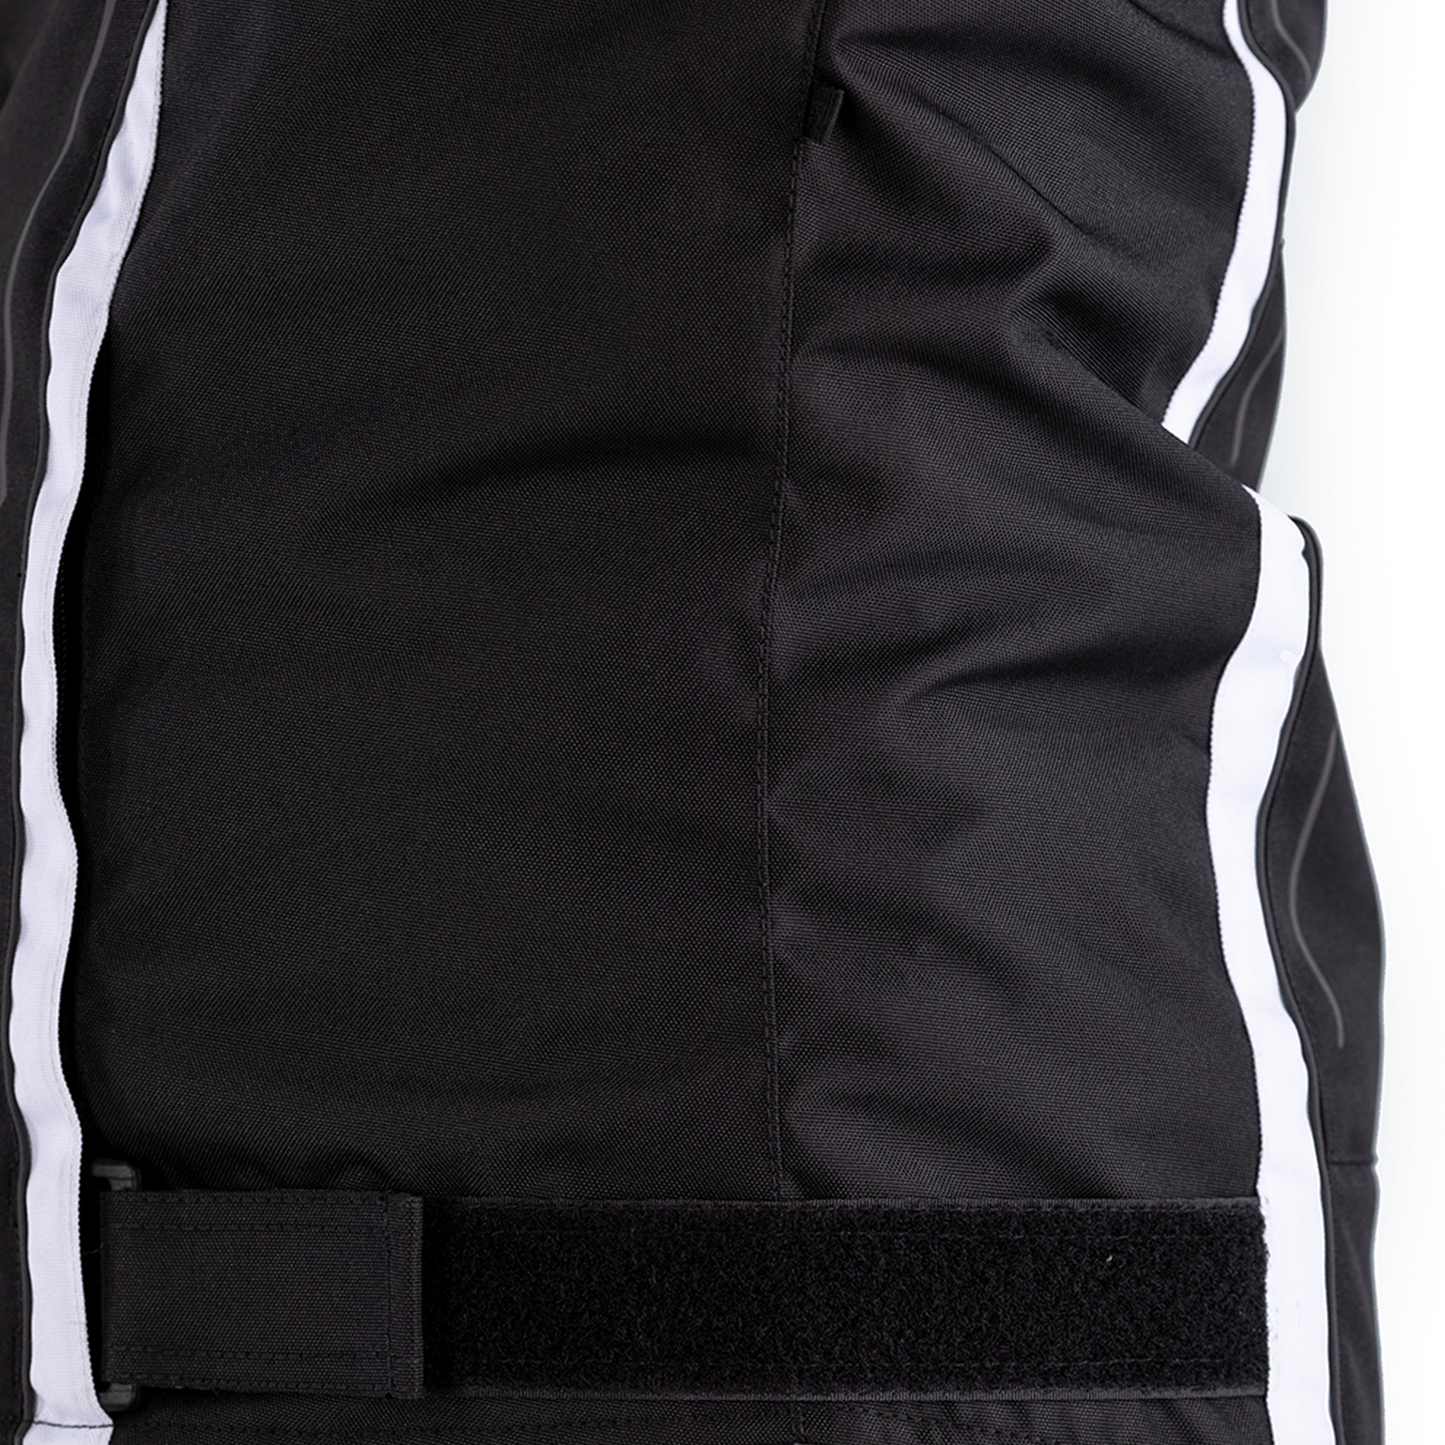 RST S1 (CE) Textile Jacket - White (2559)